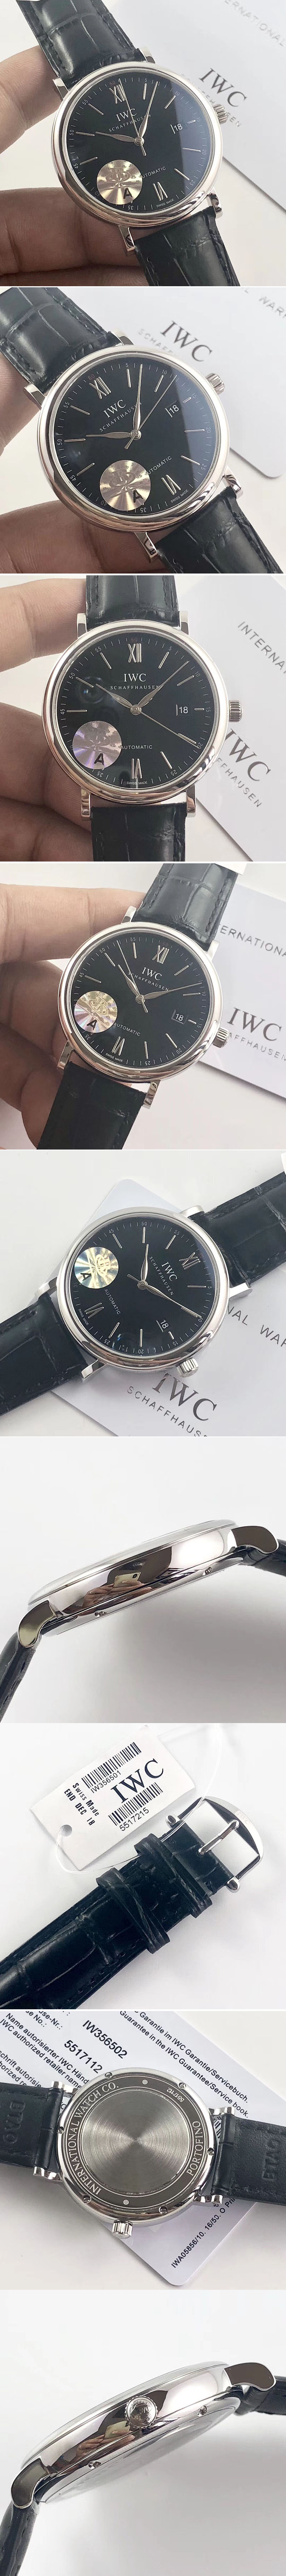 Replica IWC Watches